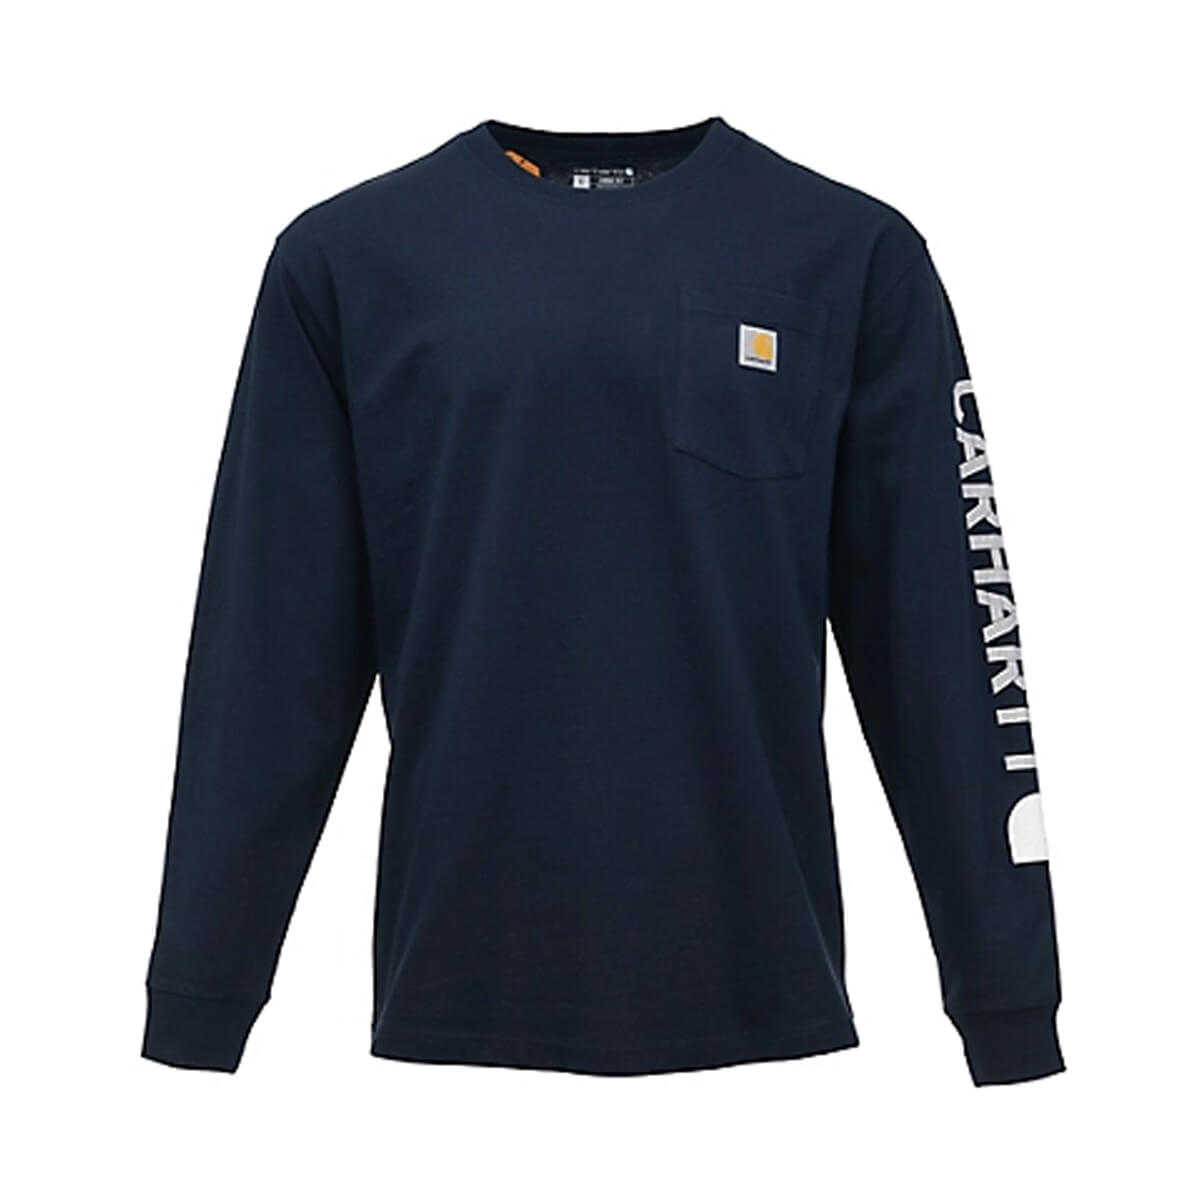 Carhartt Loose Fit Heavyweight Long-Sleeve Pocket Logo Graphic T-Shirt - New Navy